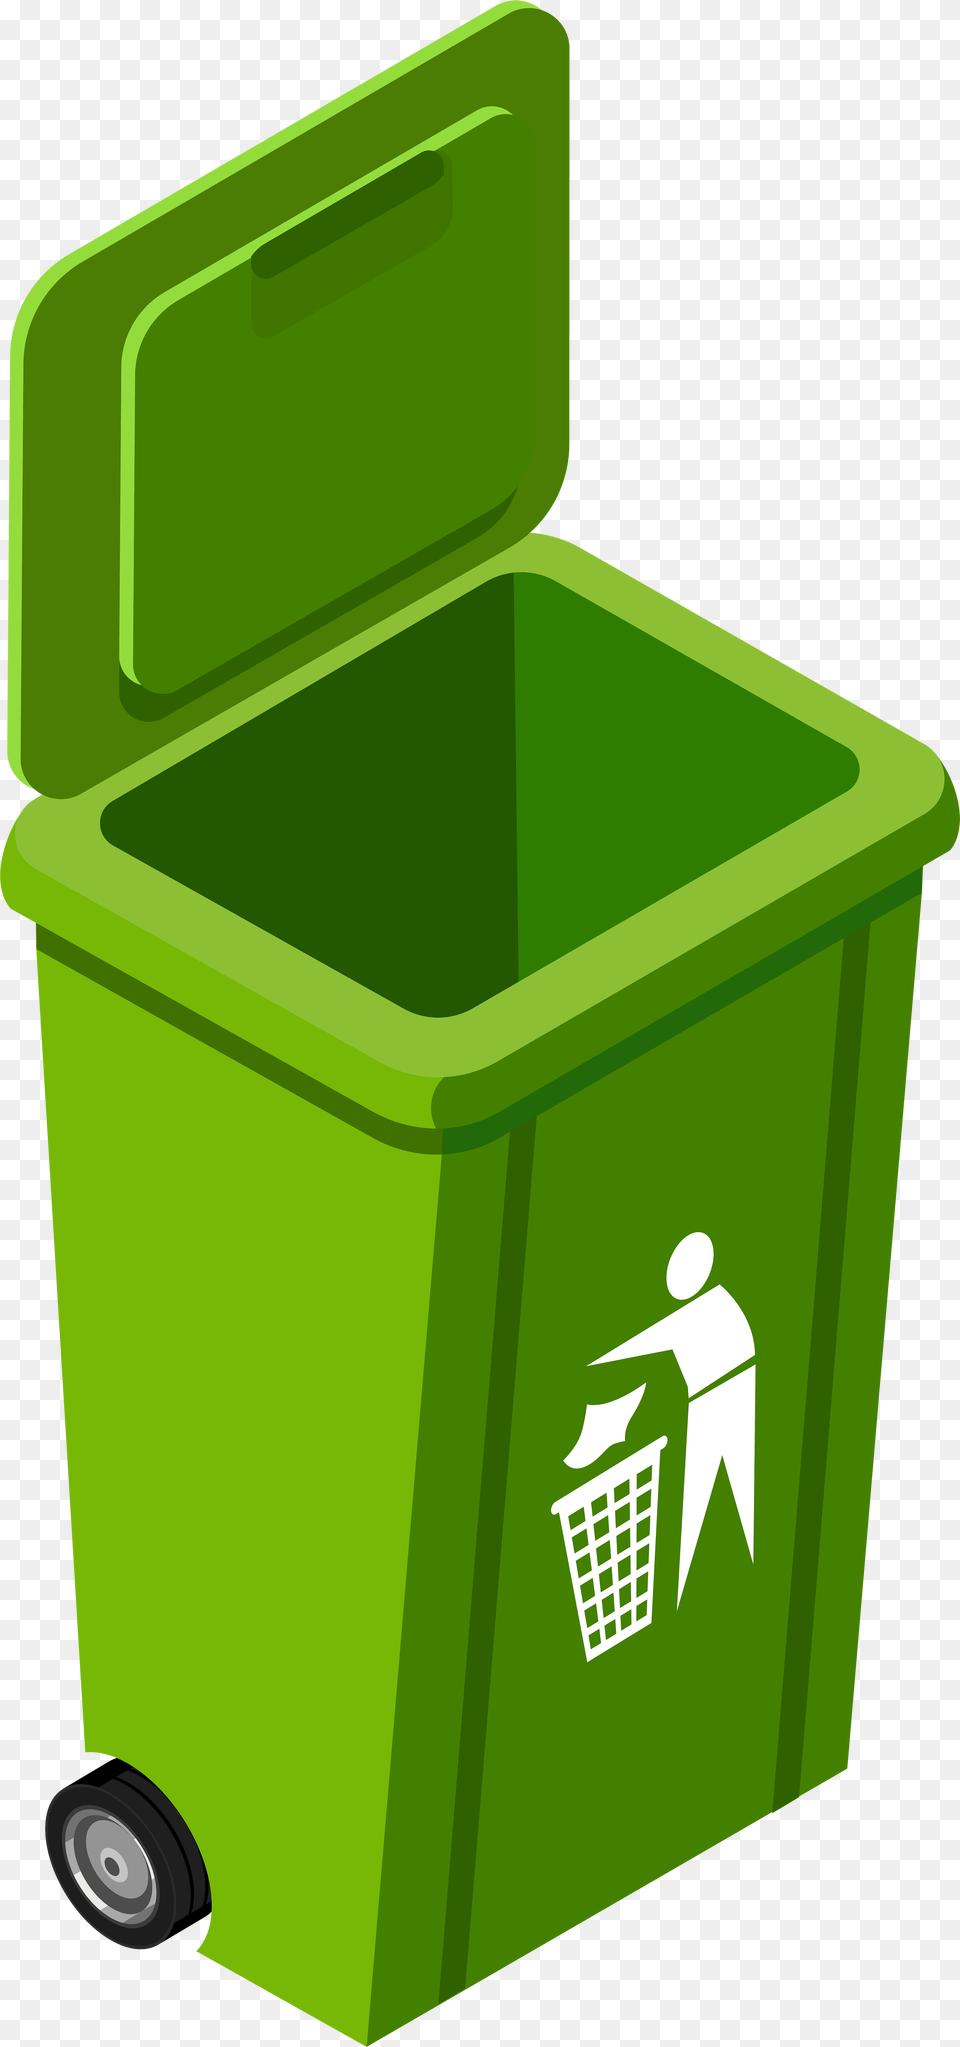 Green Trash Can Clip Art Image Green Trash Can Clipart, Recycling Symbol, Symbol, Tin, Mailbox Free Transparent Png